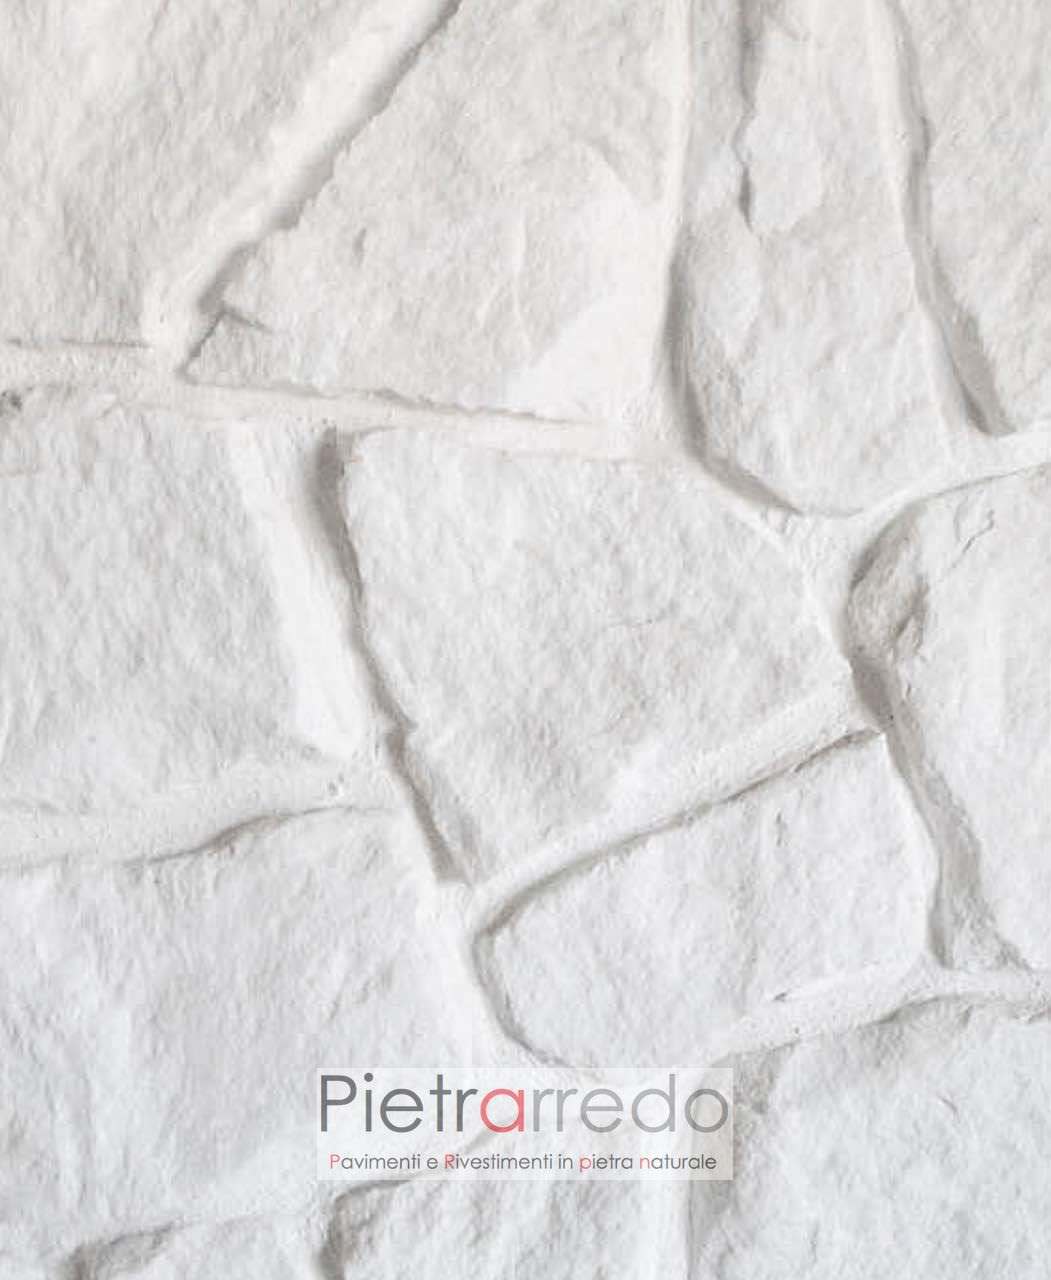 Vendita sasso bianco brillantinata per pareti e facciate uri thasos pietrarredo price stone